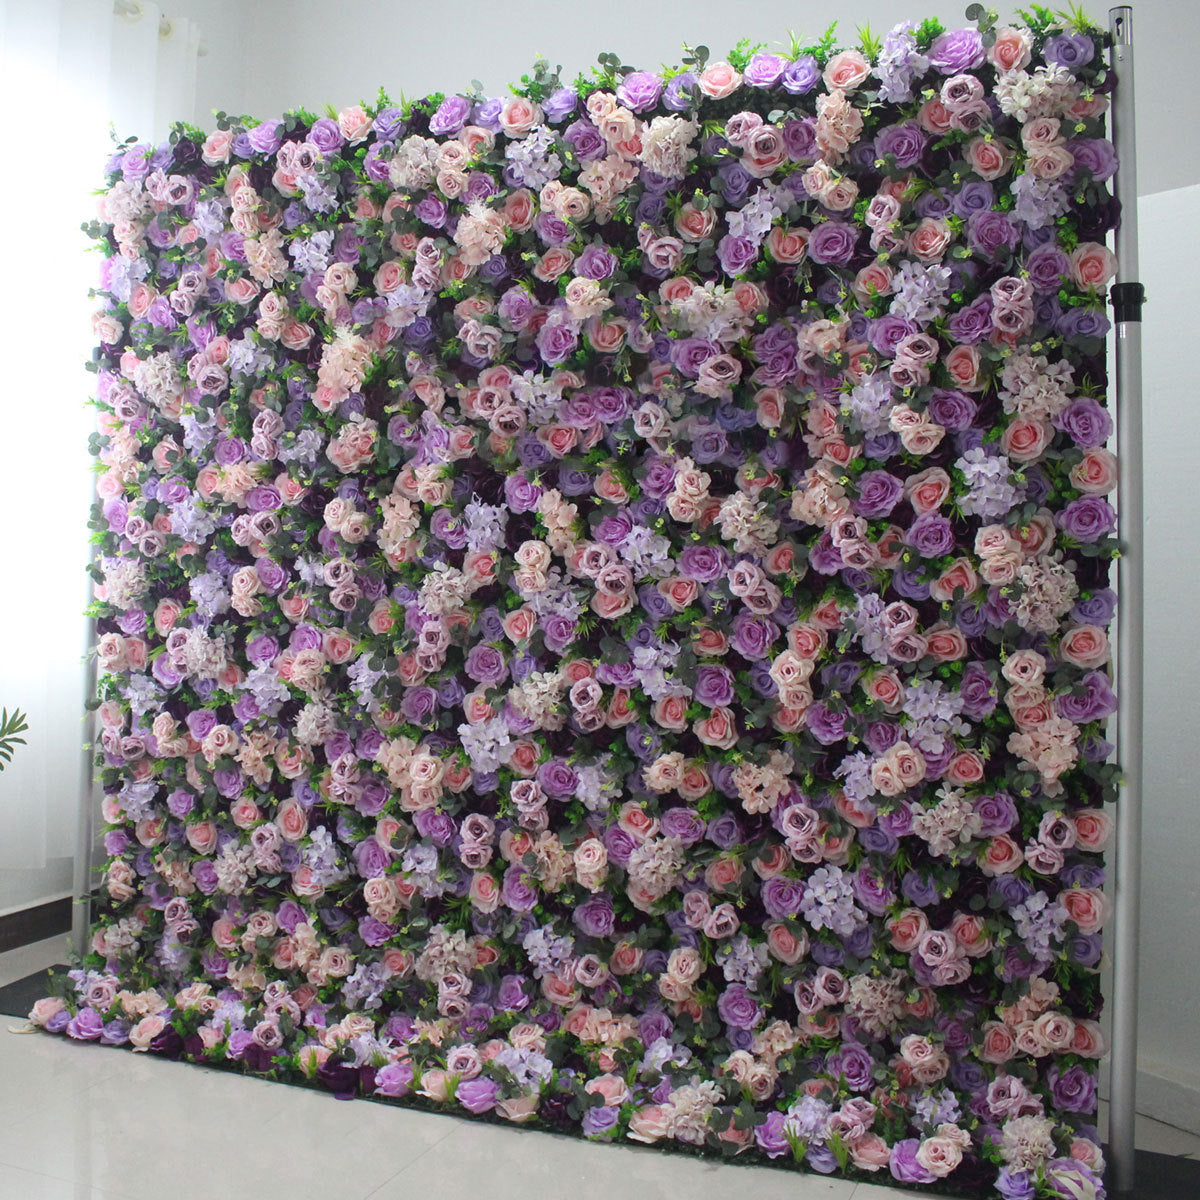 3D Artificial Flower Wall Arrangement Wedding Party Birthday Backdrop Decor HQ1176